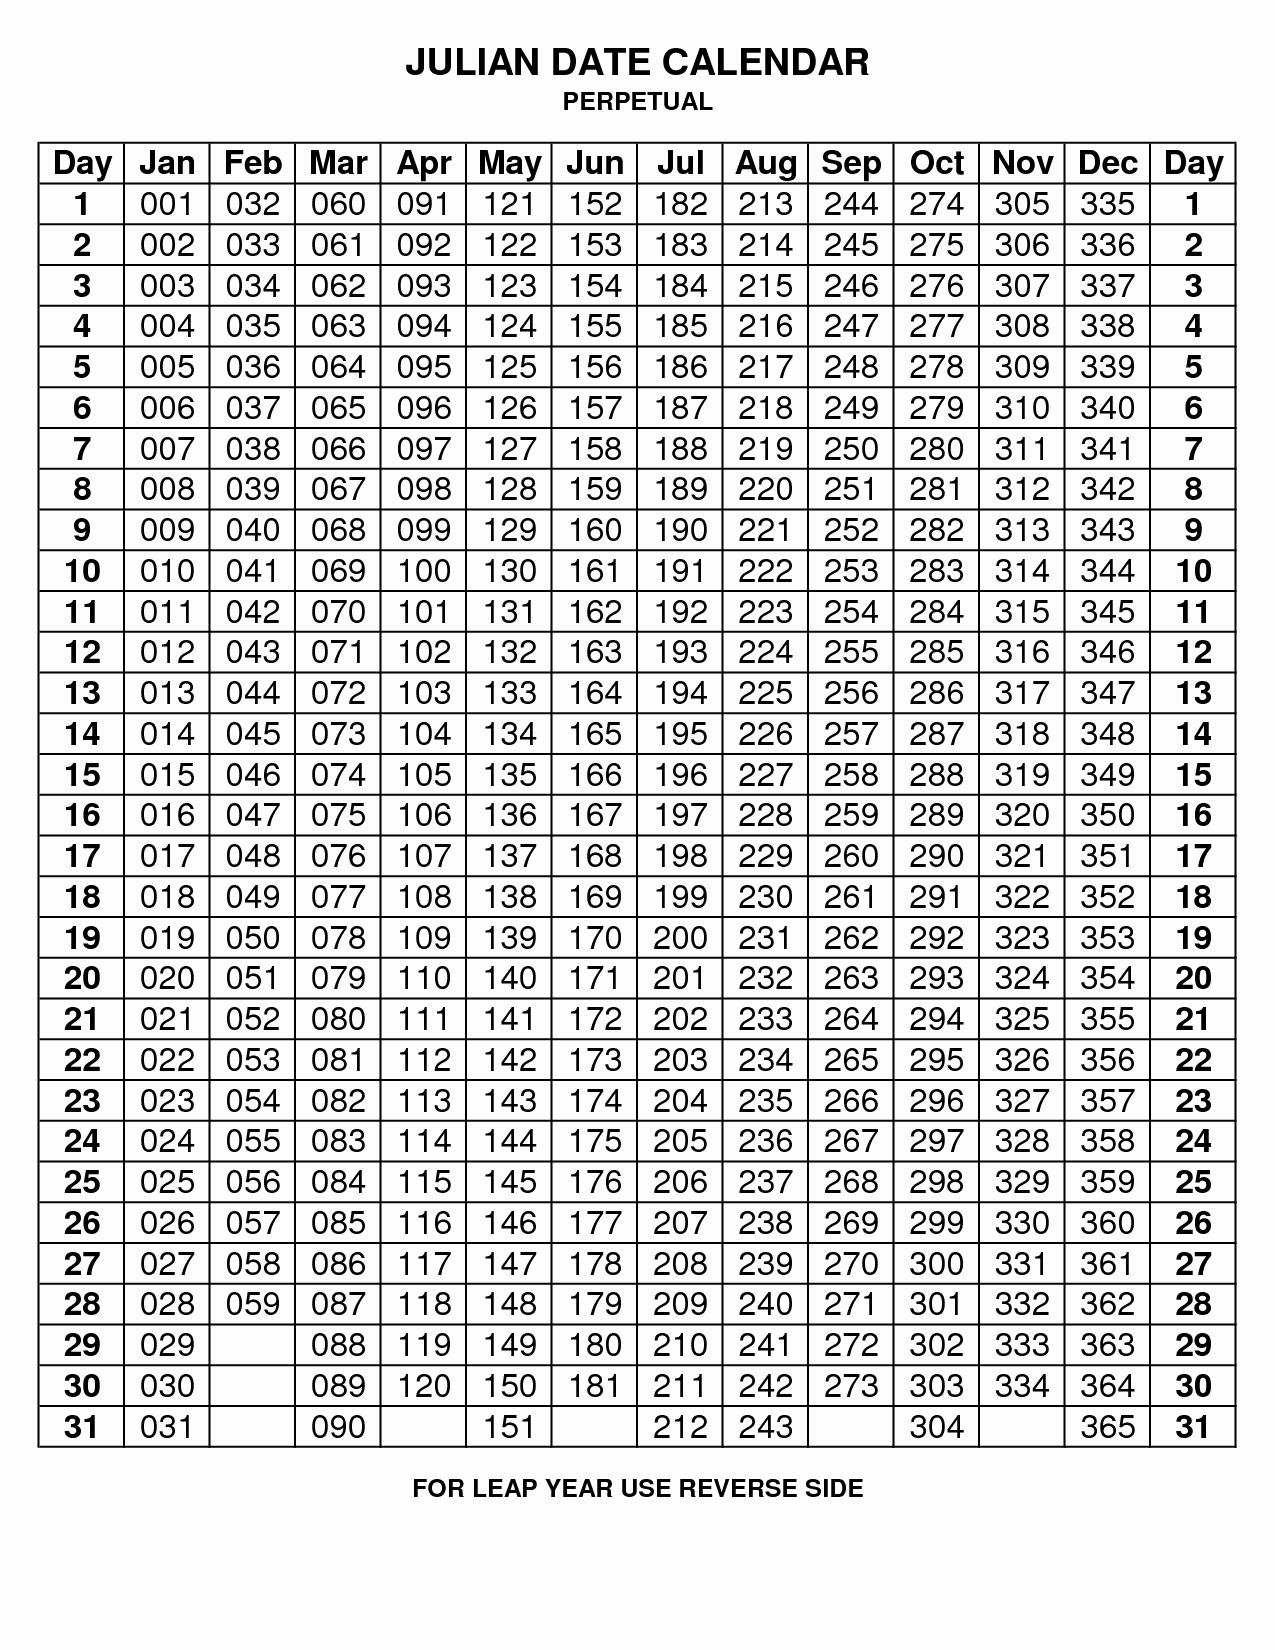 Depo Provera Perpetual Calendar To Print - Calendar  Depo-Provera Injection Date Chart 2021